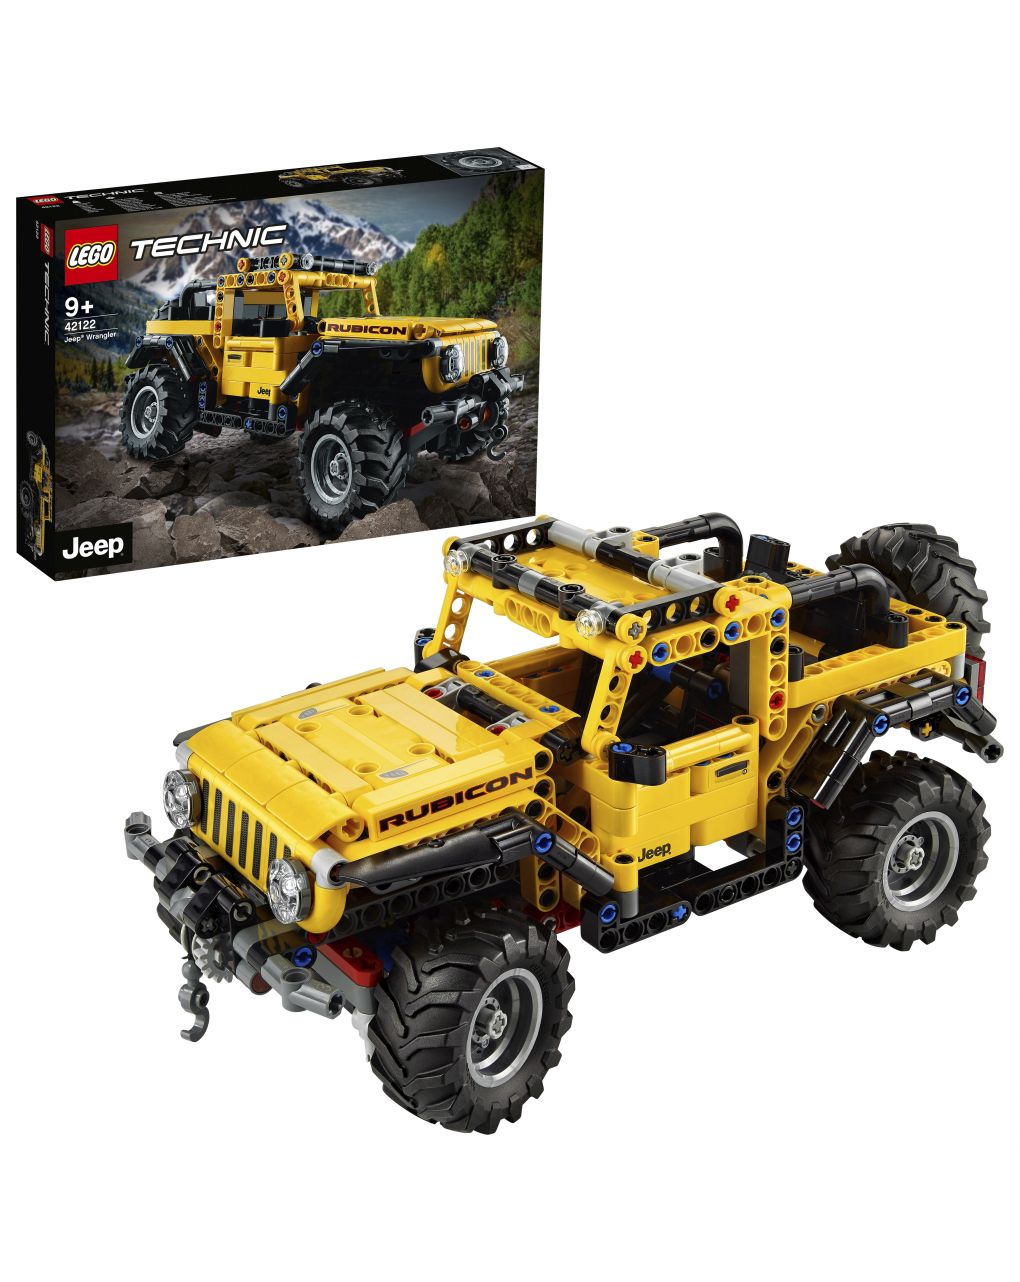 Lego technic - jeep® wrangler - 42122 - LEGO